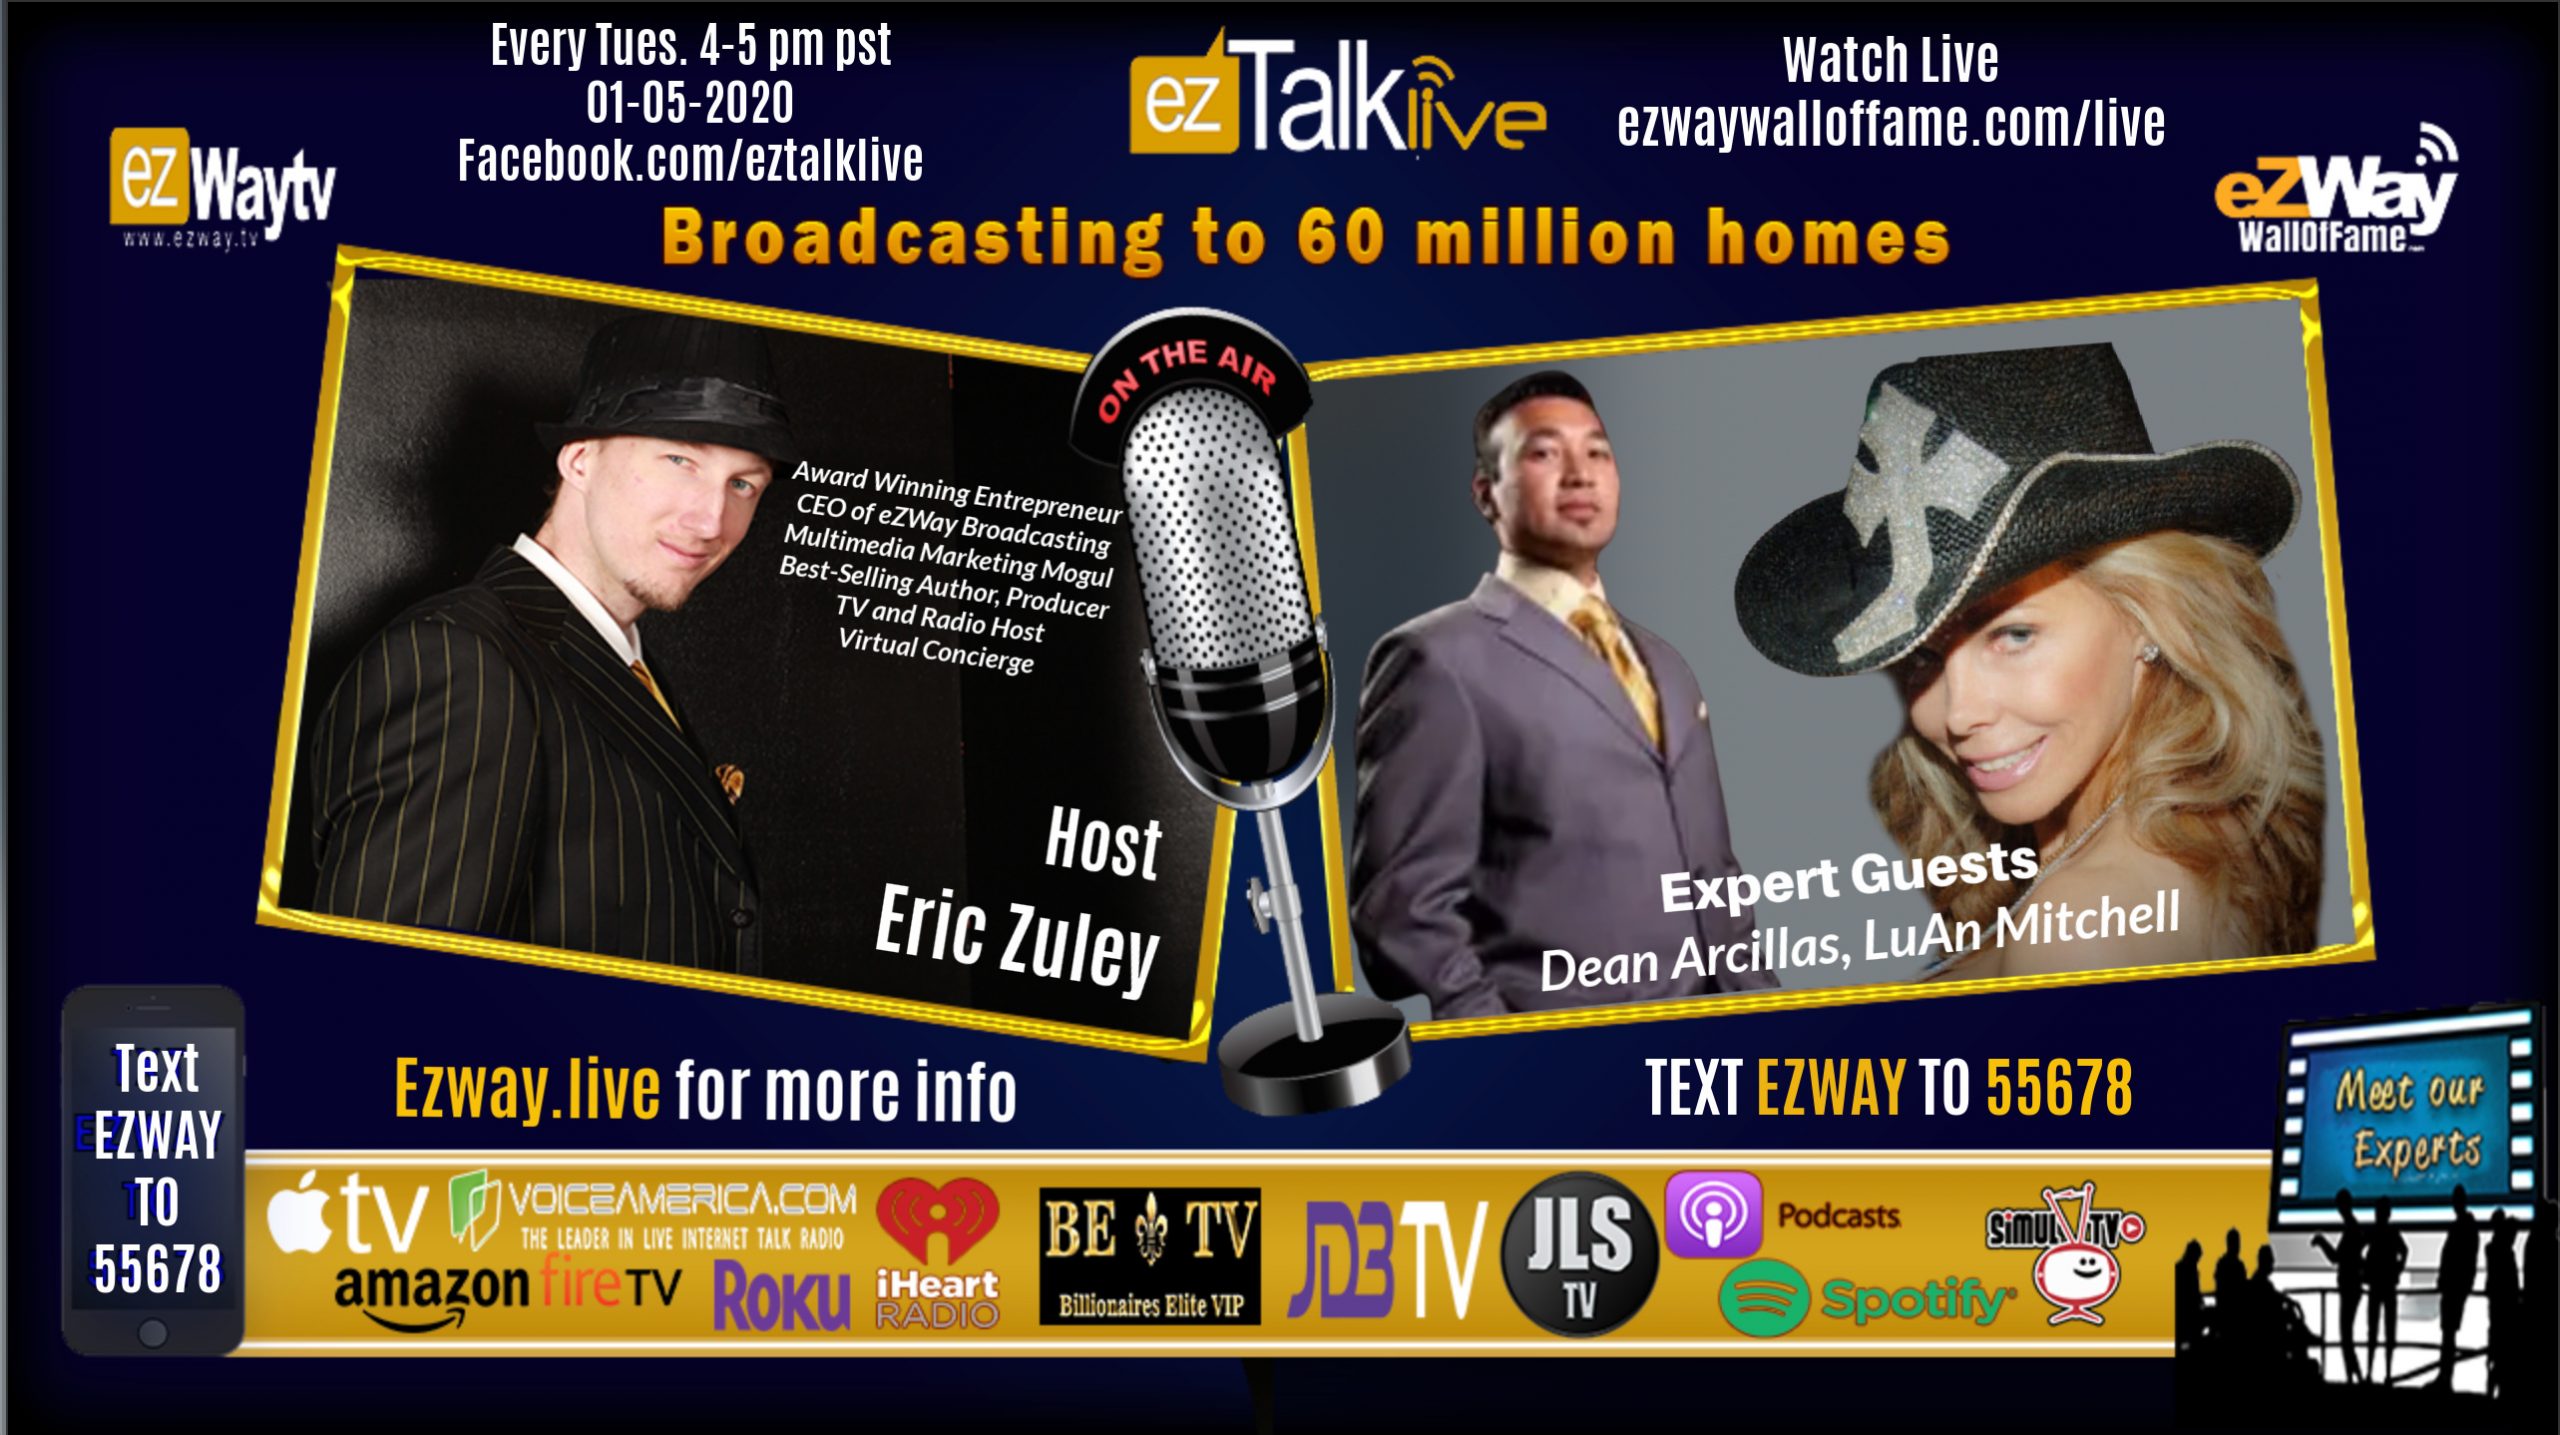 EZ TALK LIVE 01-05-2021 The Business of Broadcast Feat. Dean Arcillas